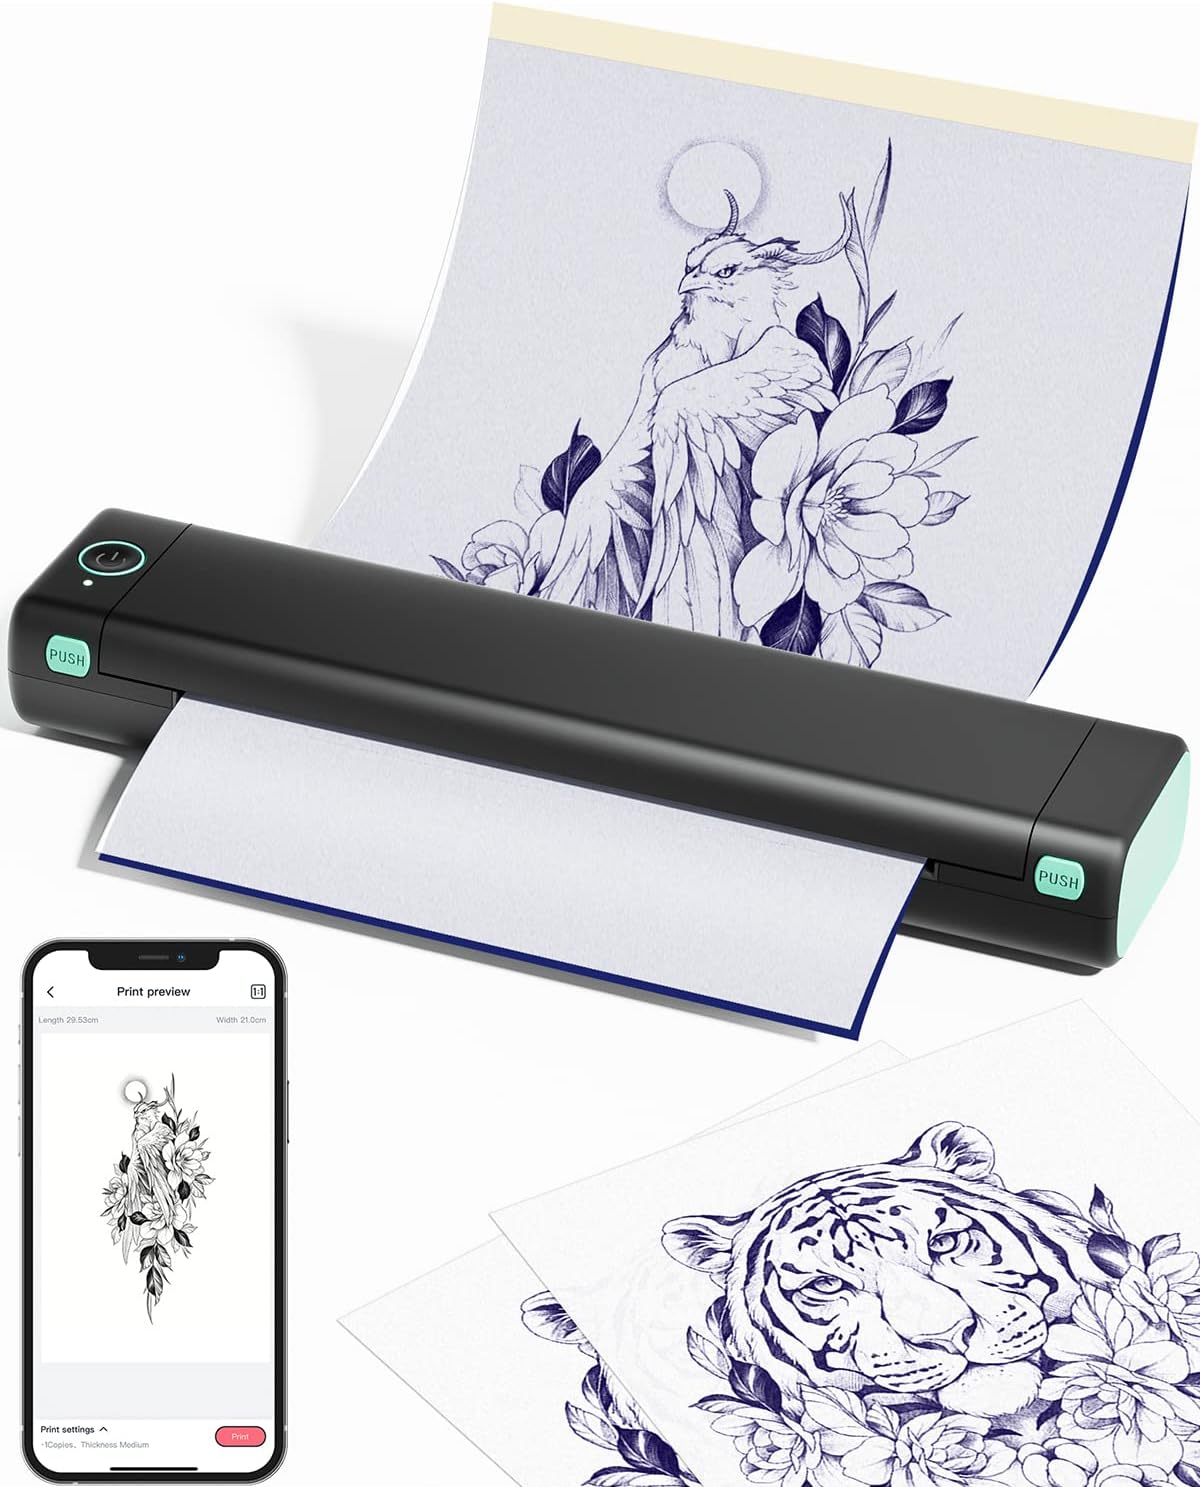 Phomemo M08F Wireless Tattoo Transfer Stencil Printer